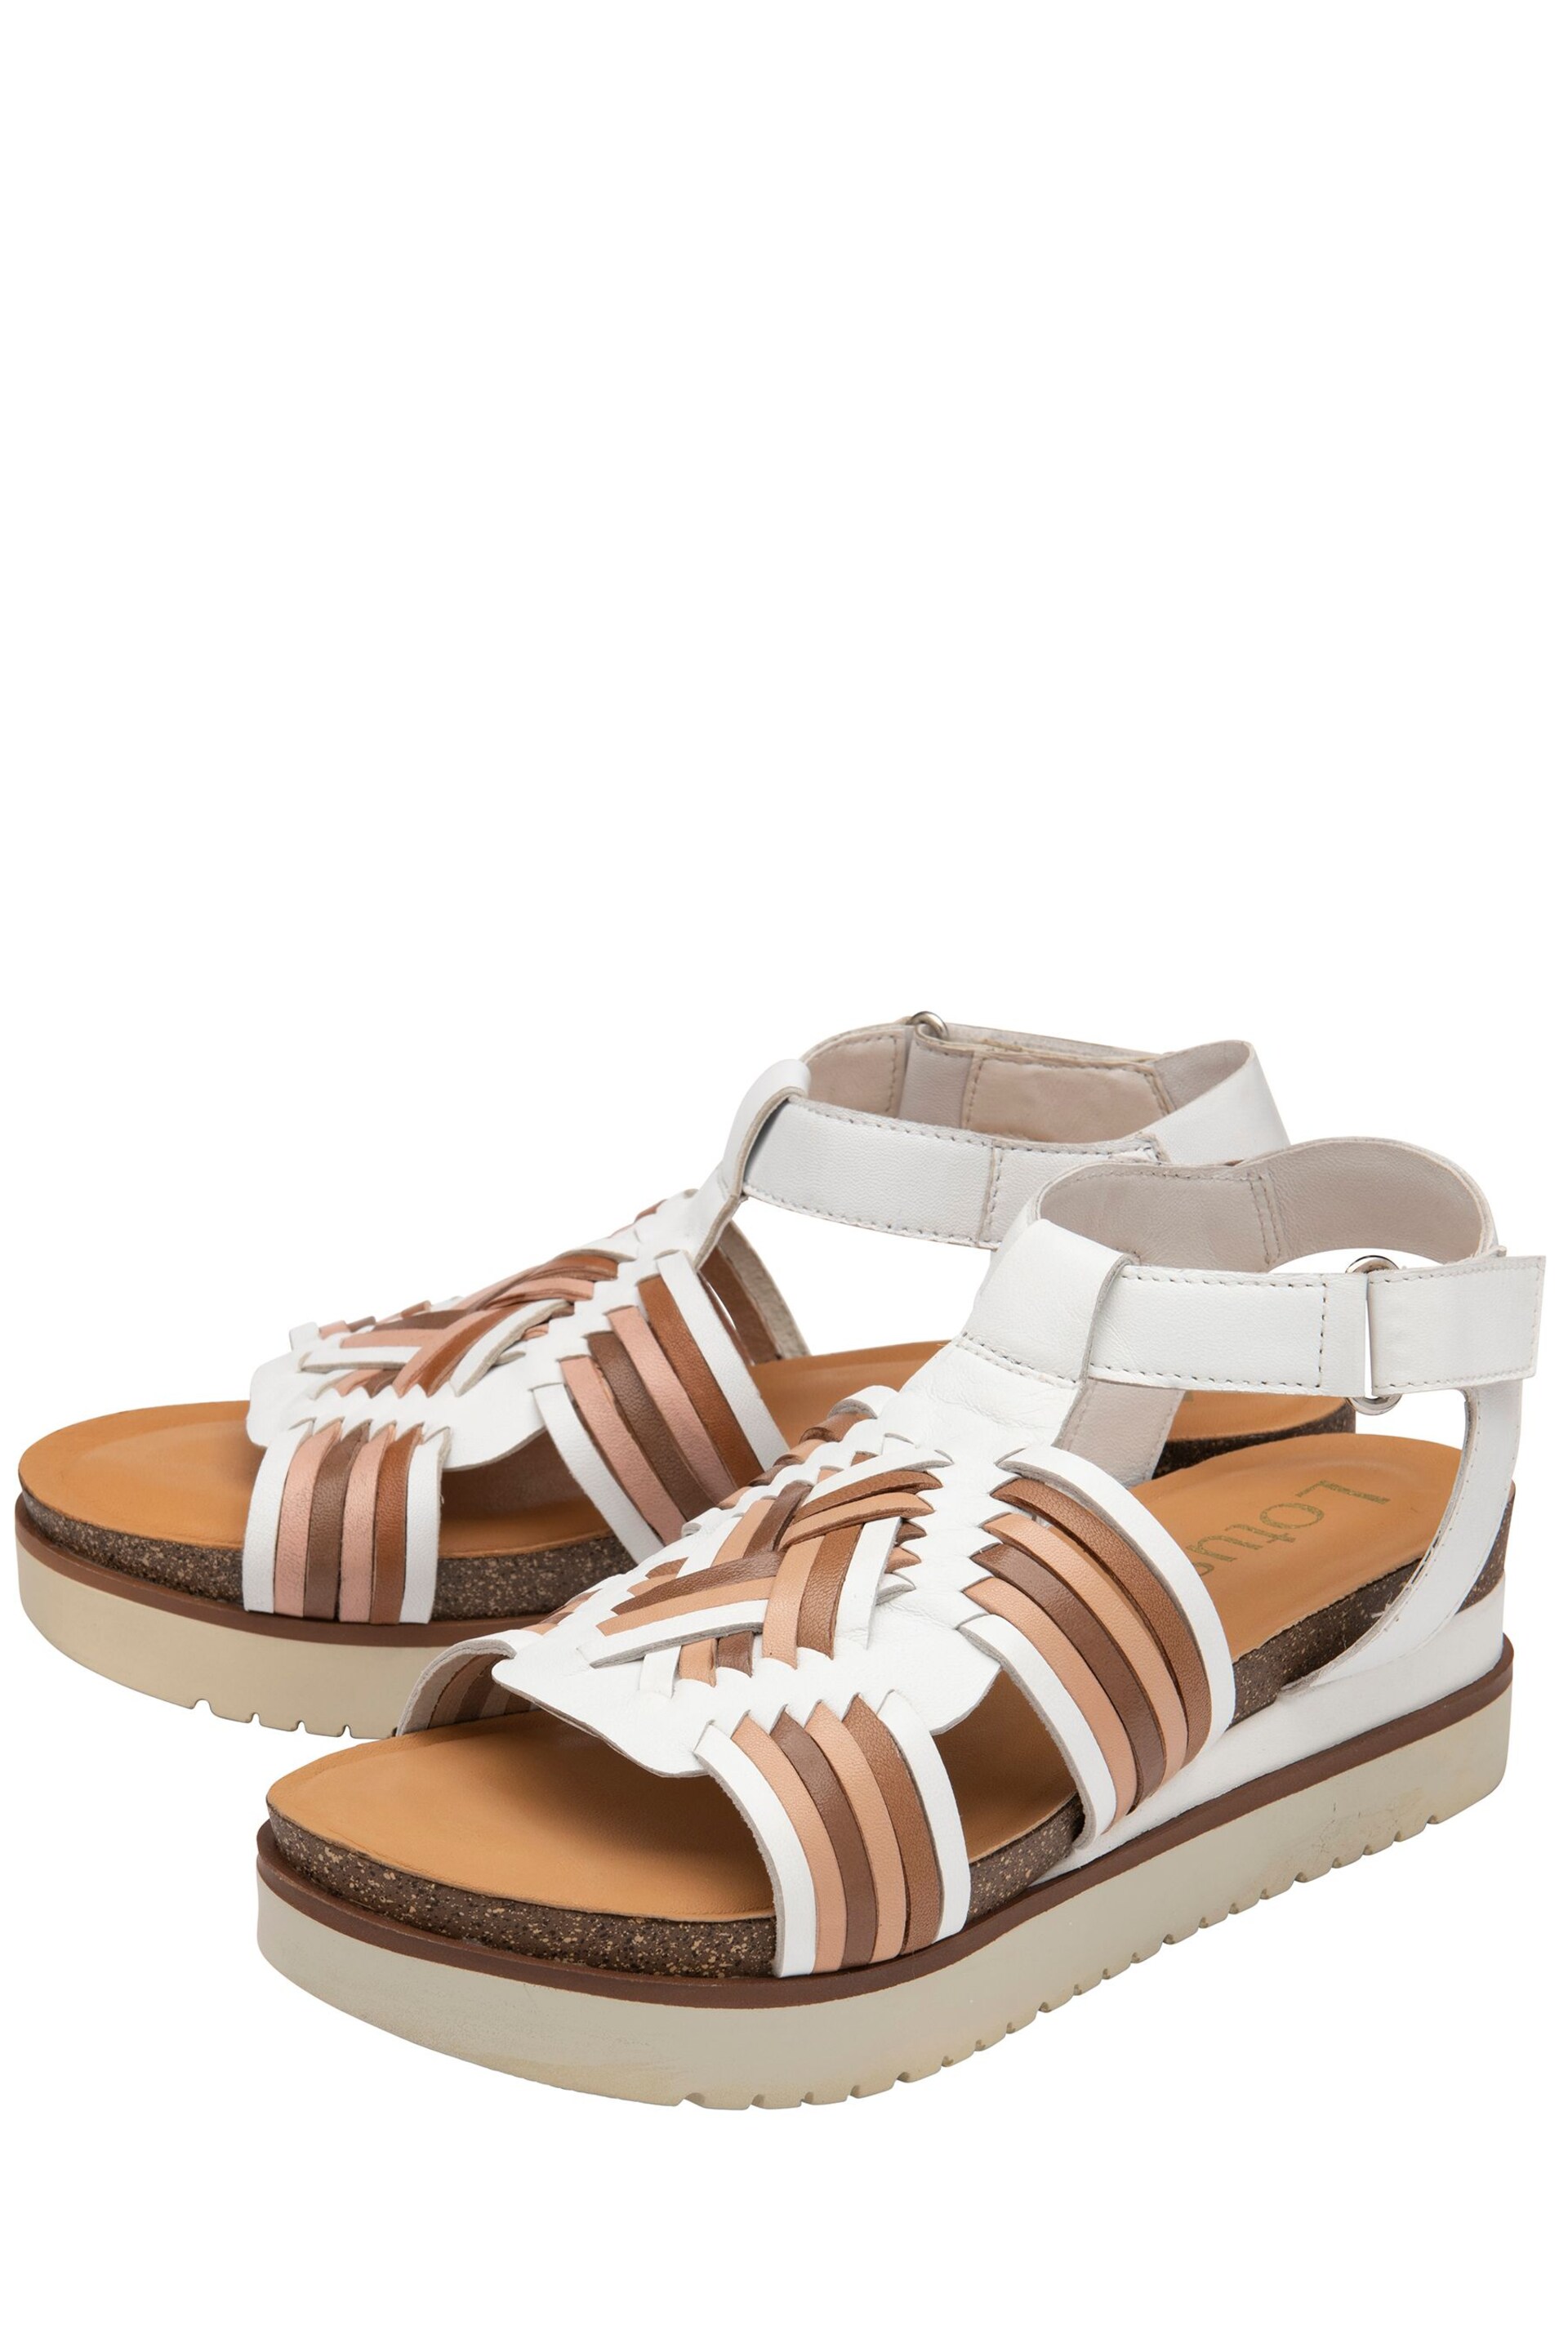 Lotus White Leather Flatform Sandals - Image 2 of 4